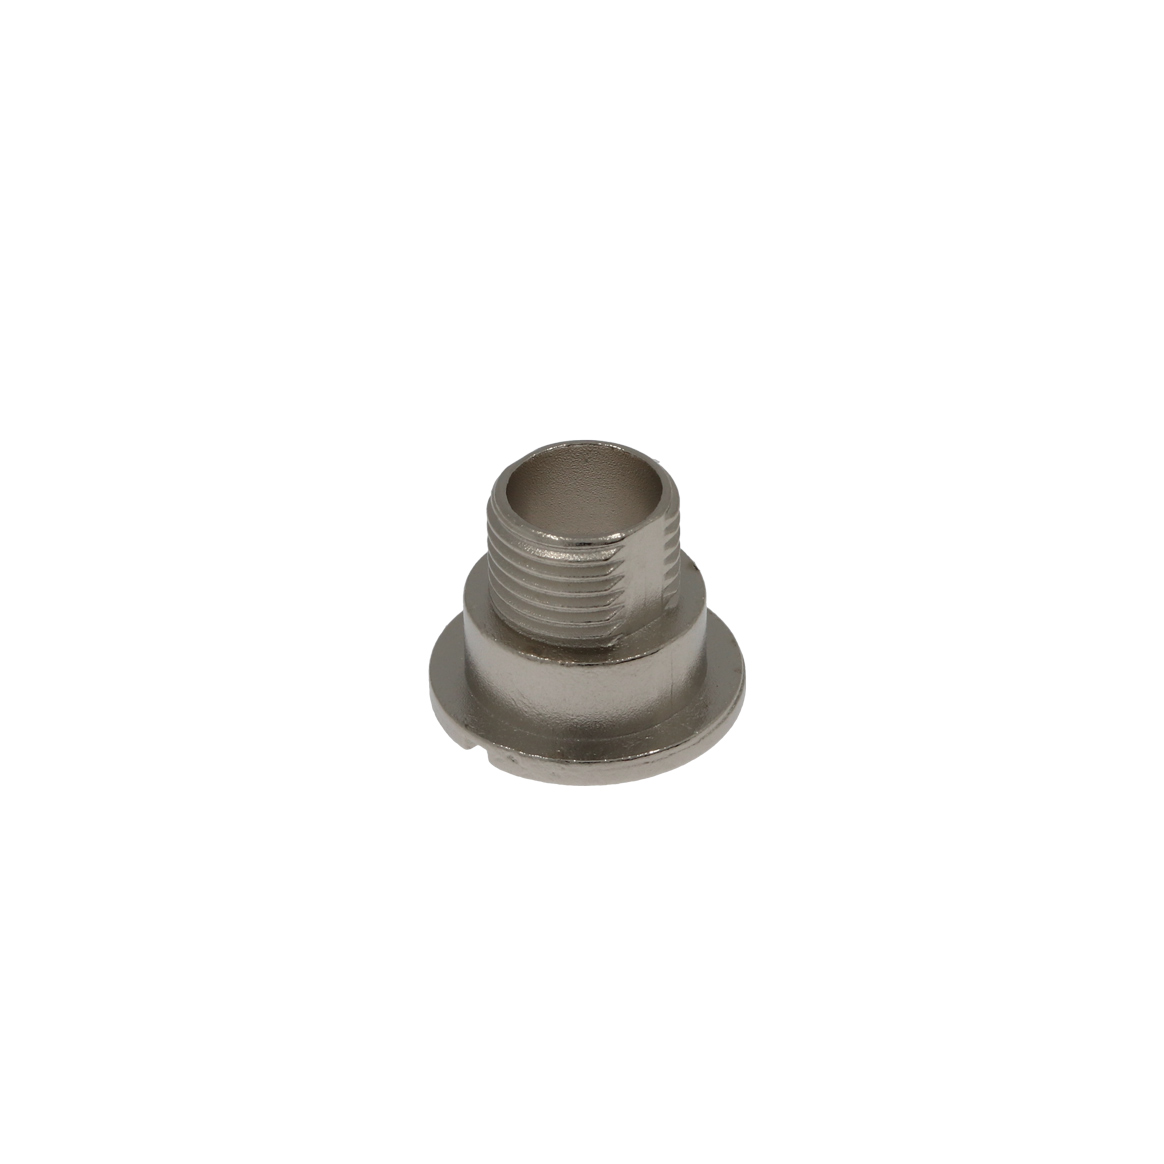 Fixation nut nickel, 8.9 mm